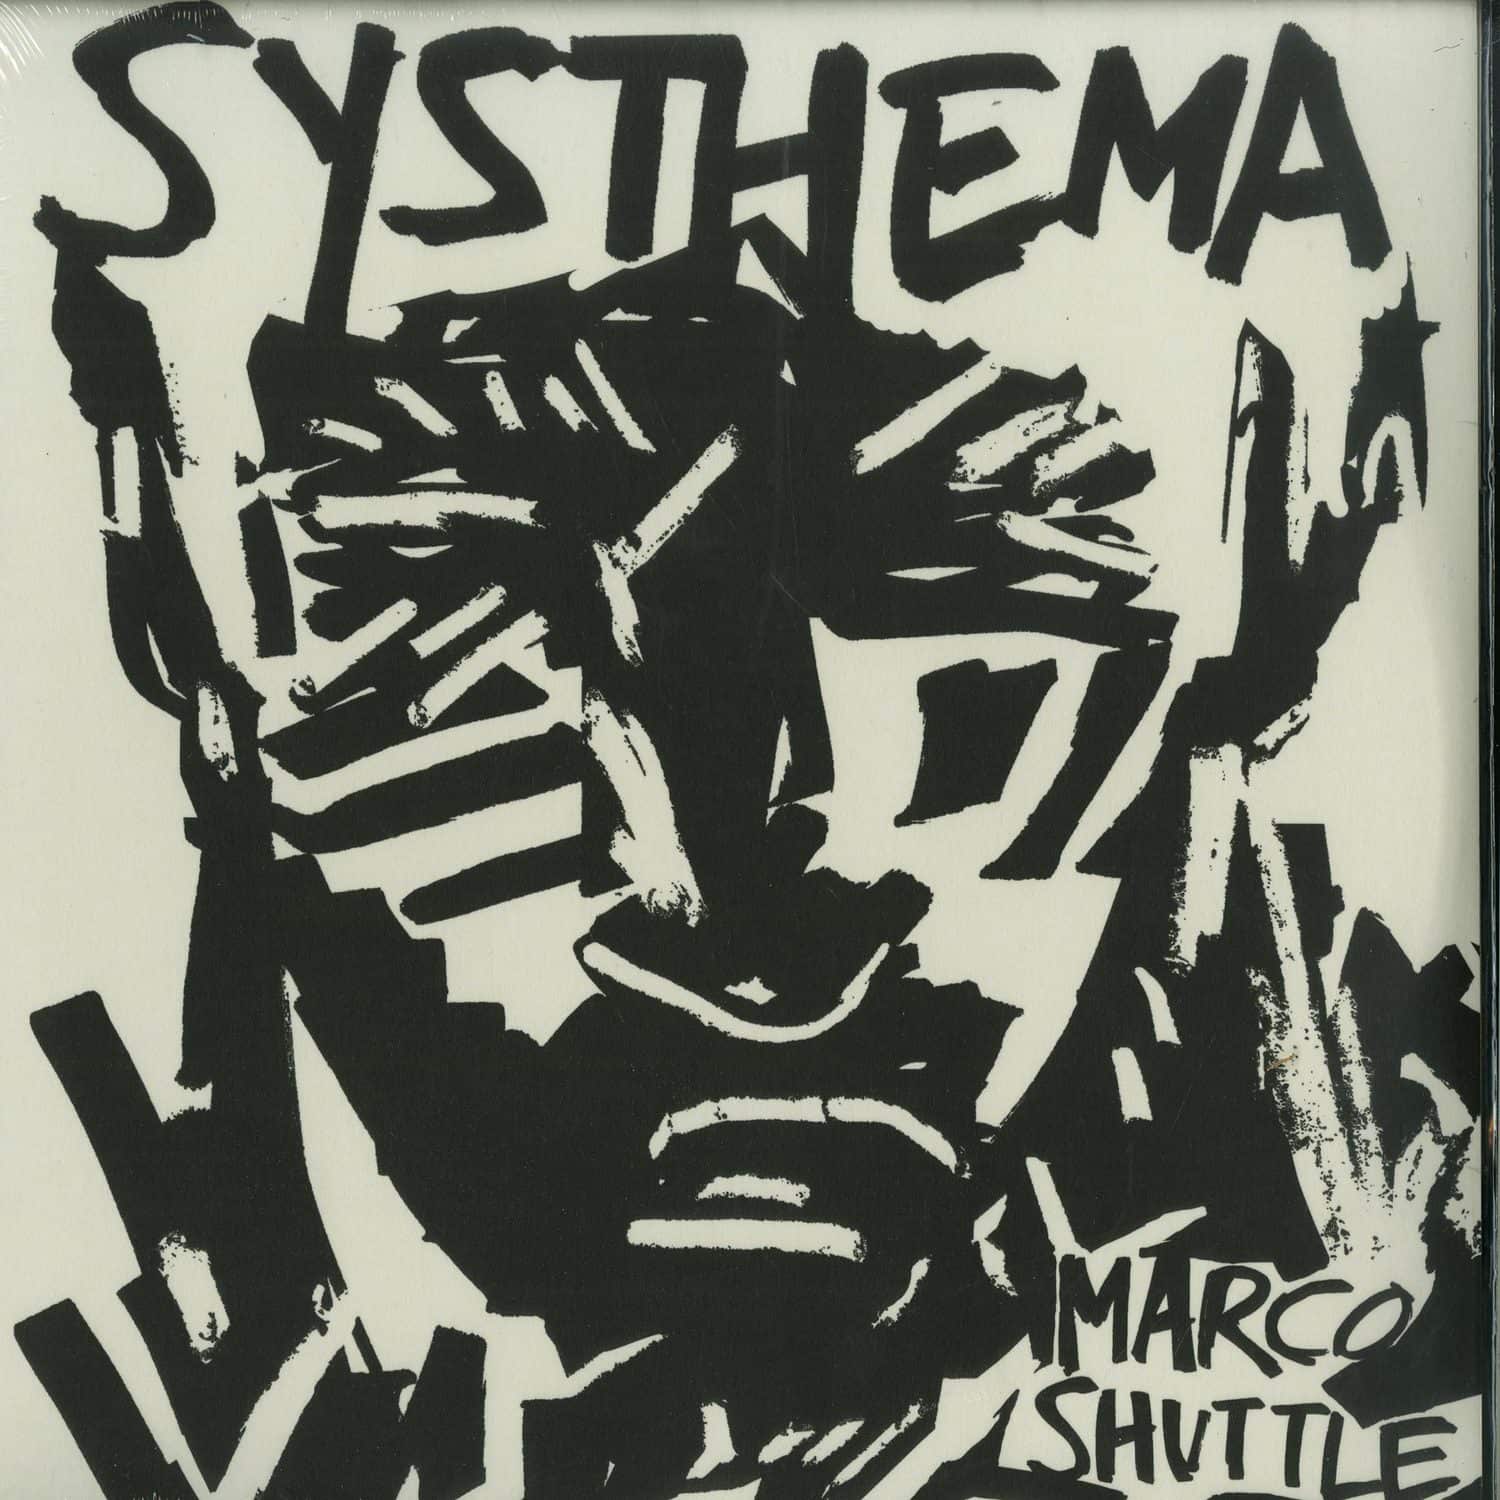 Marco Shuttle - SYSTHEMA 